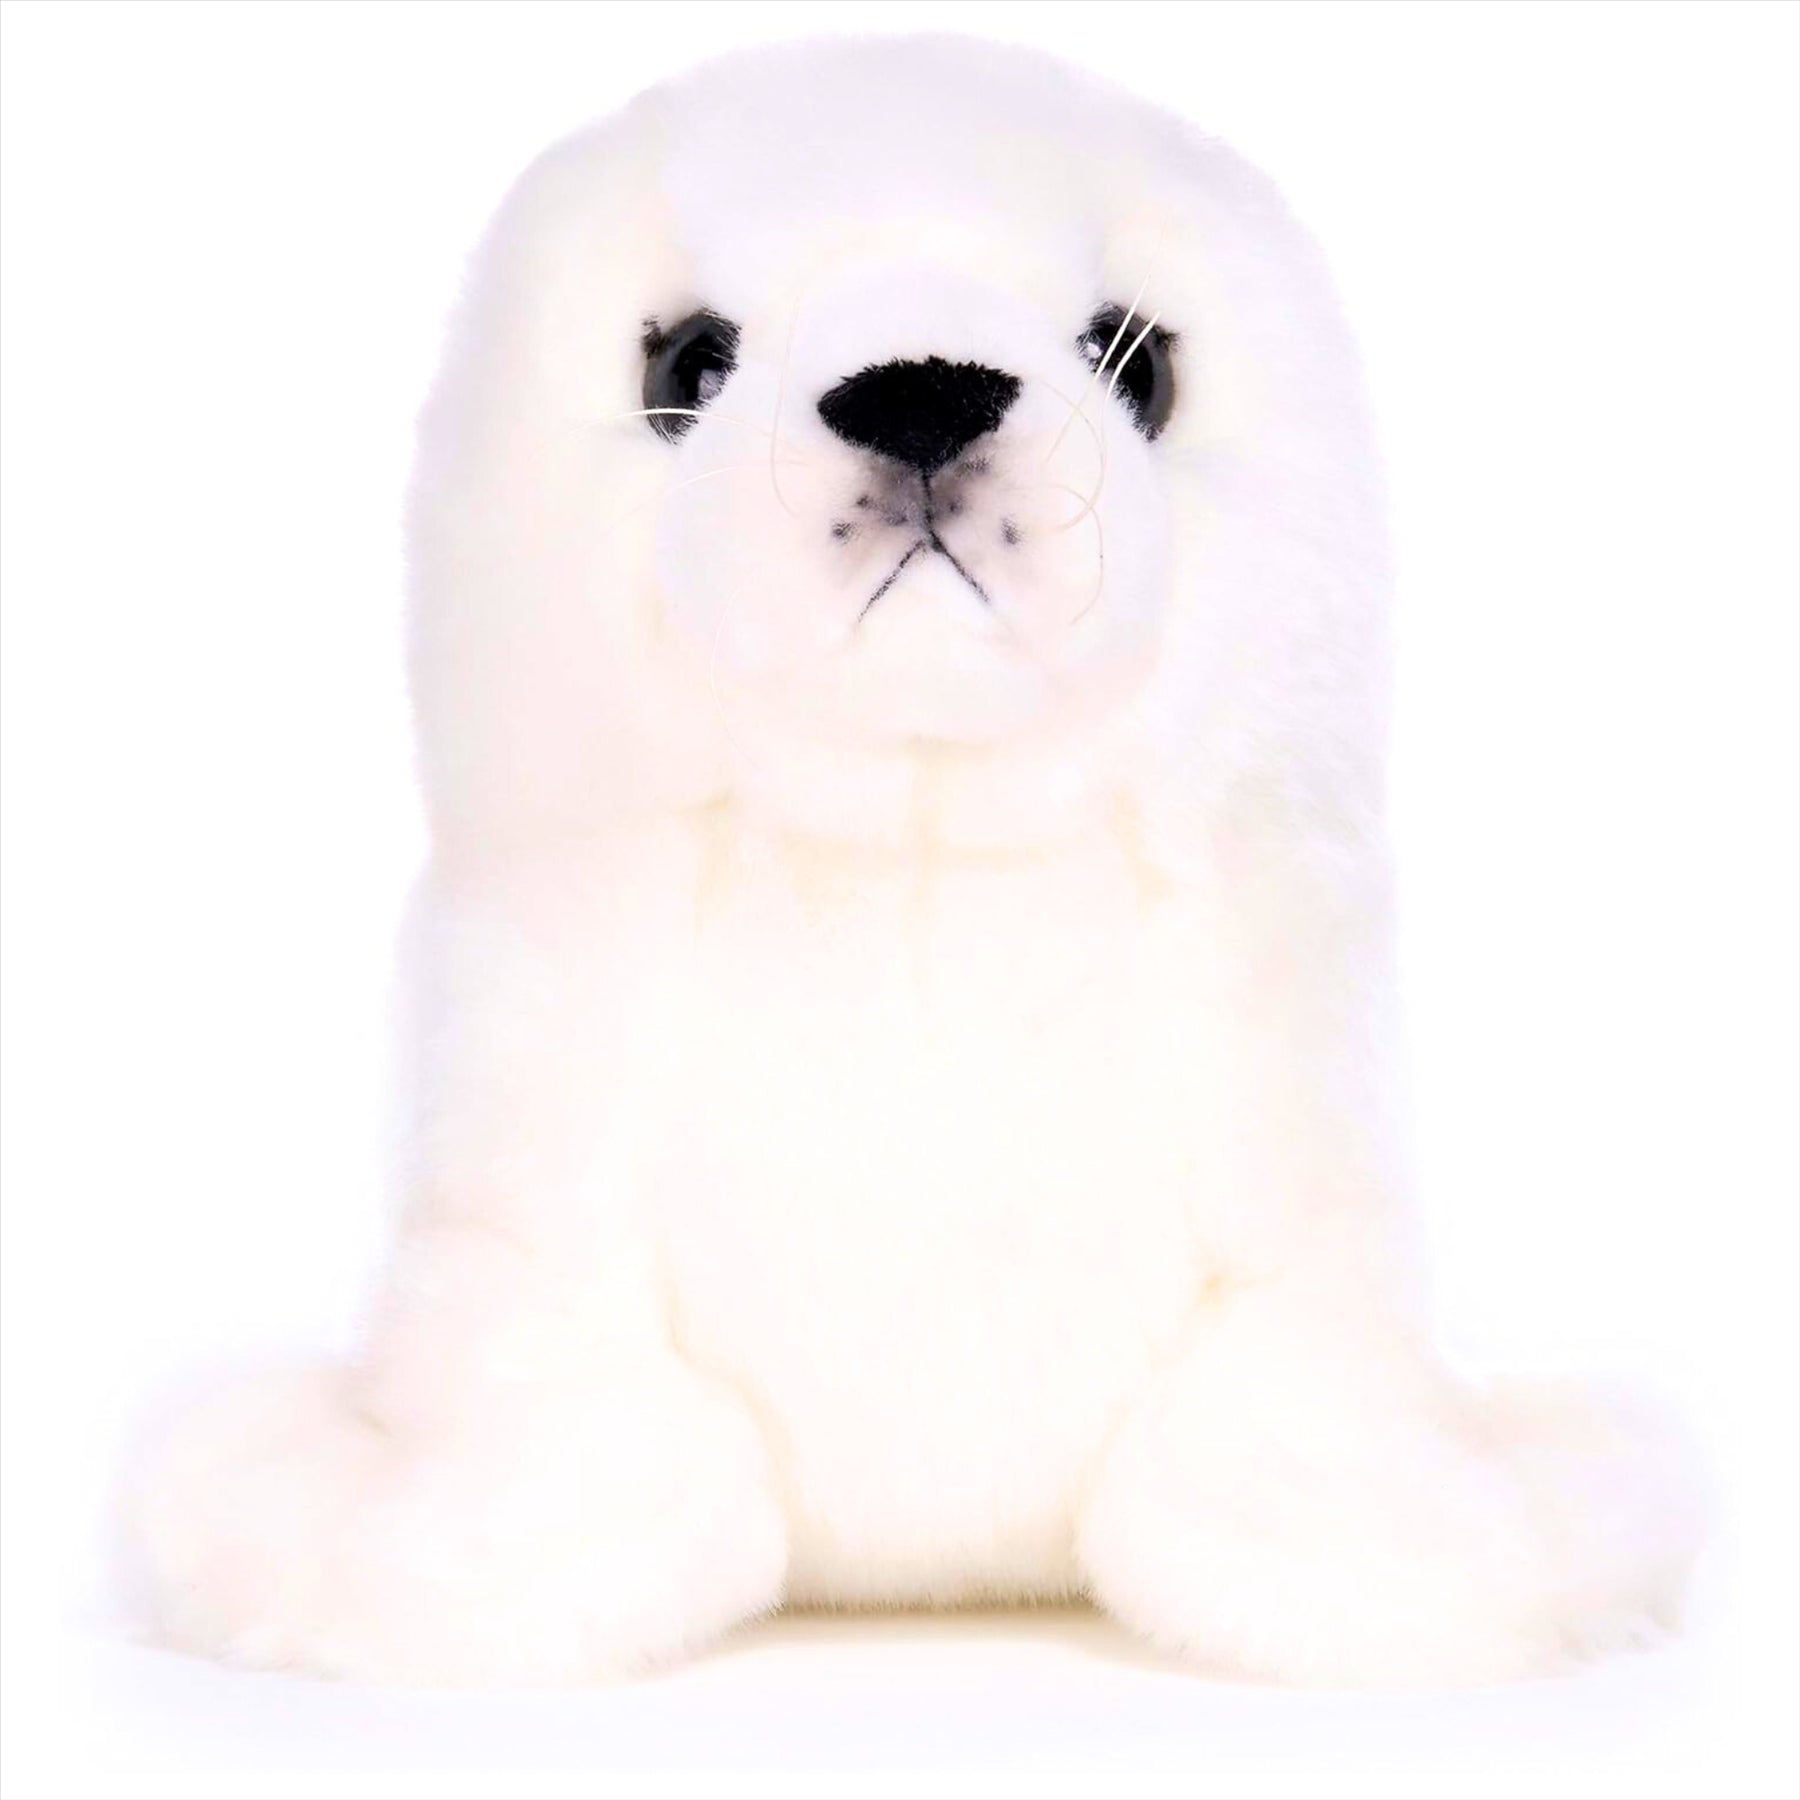 Posh Paws BBC Earth Collection Seal Pup Super Soft Plush Toy 25cm 10" - Toptoys2u